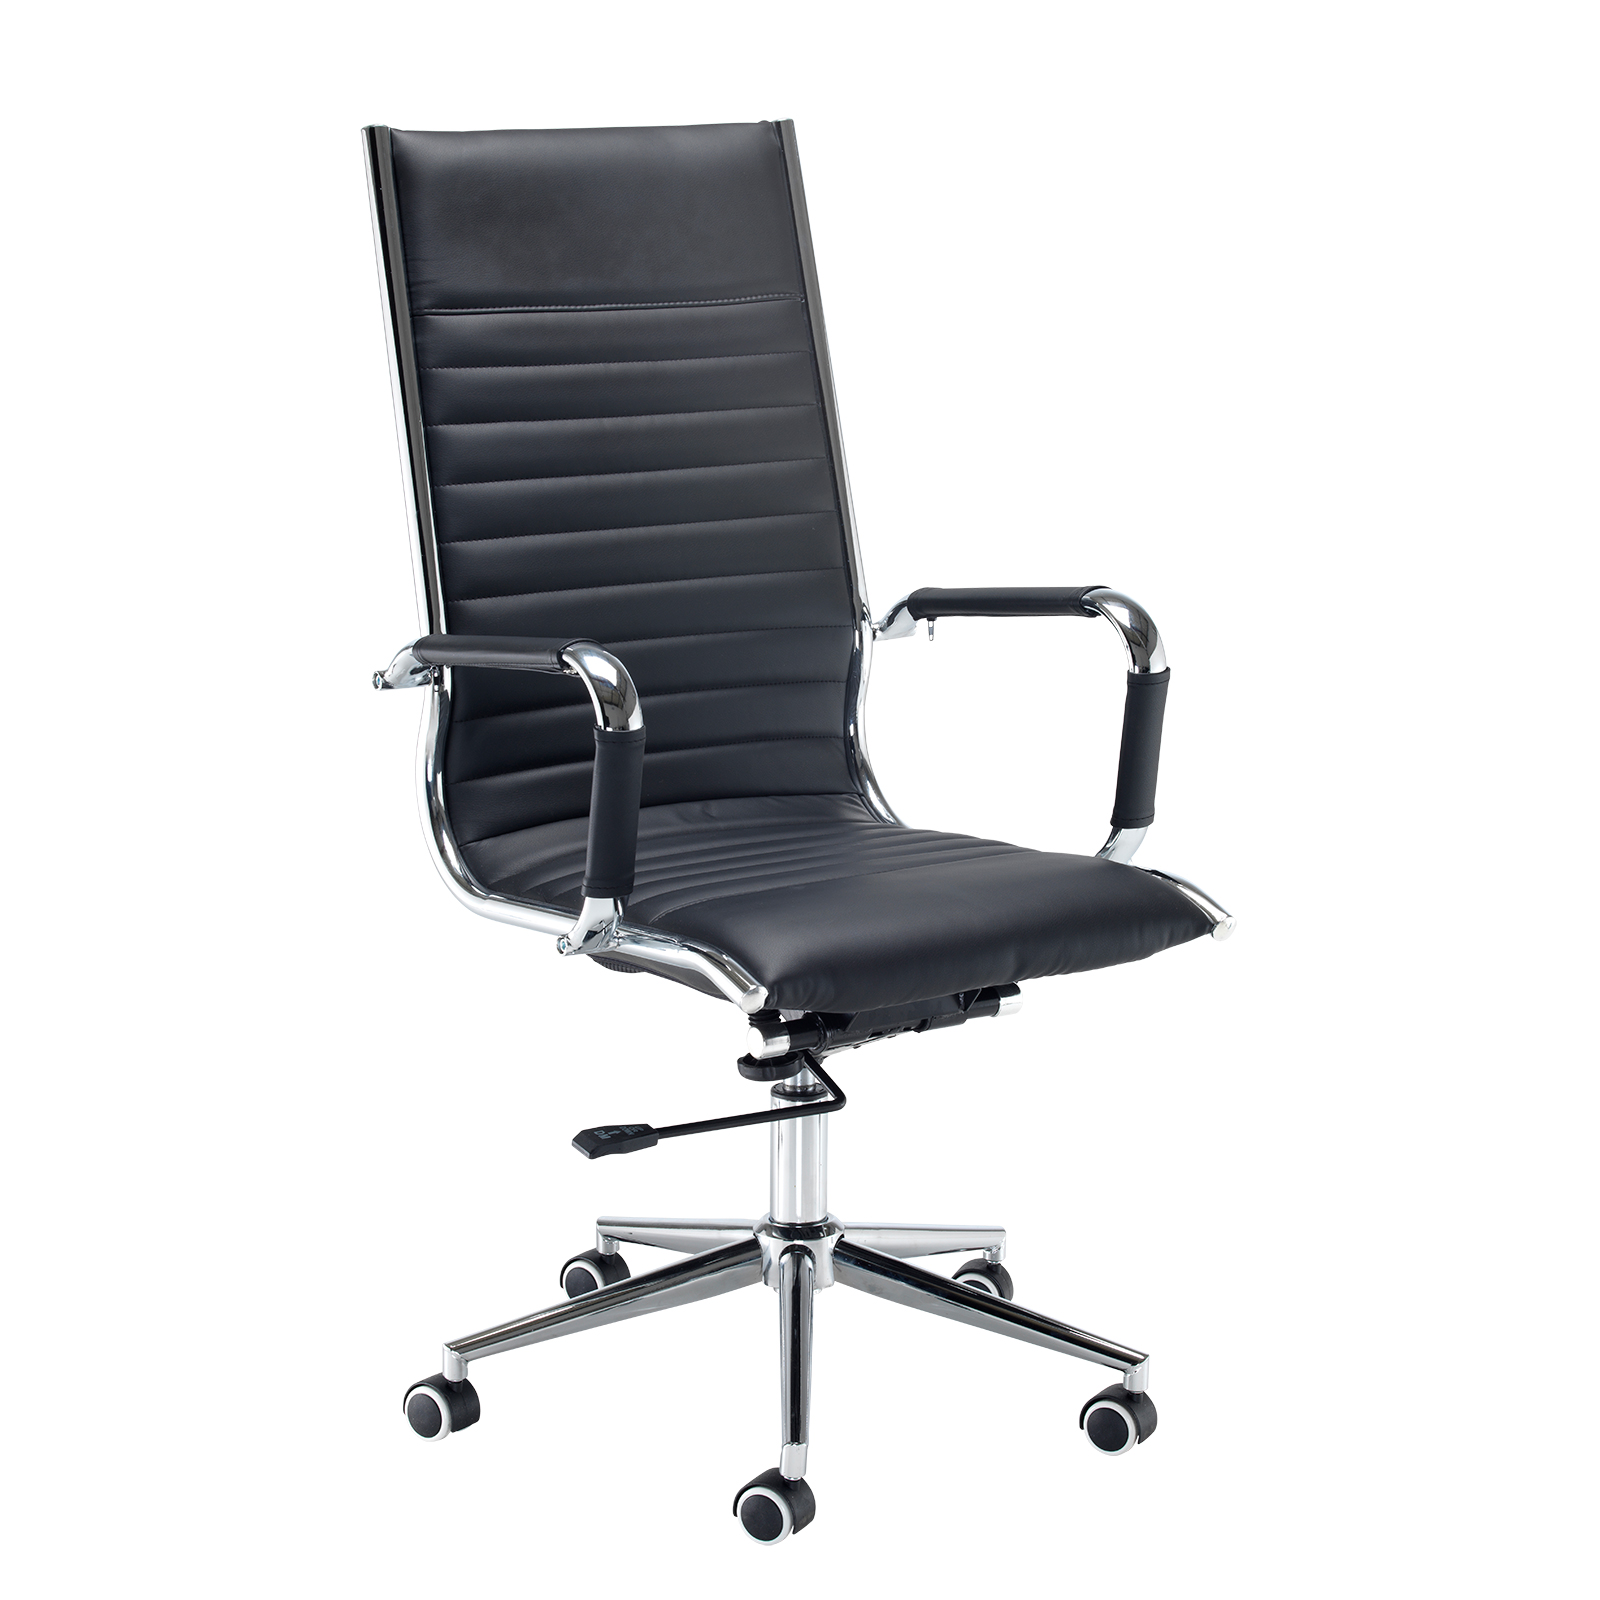 Bari high back executive chair - black faux leather